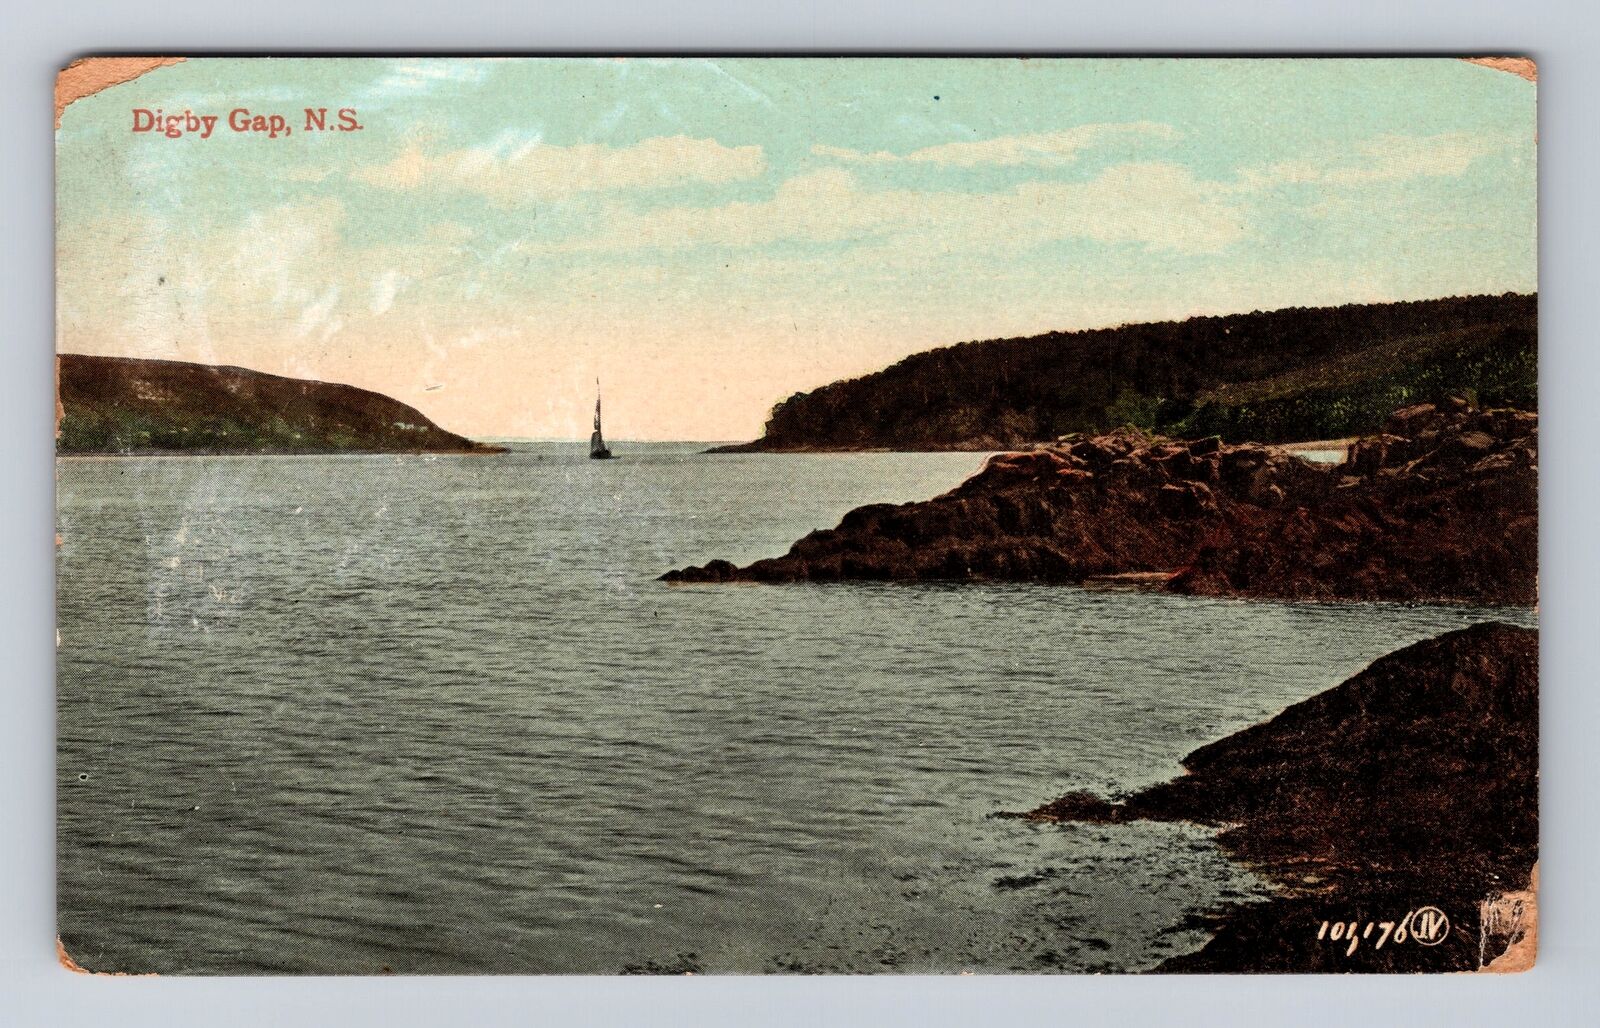 Digby Nova Scotia-Canada, Digby Gap, Antique, Vintage Souvenir Postcard